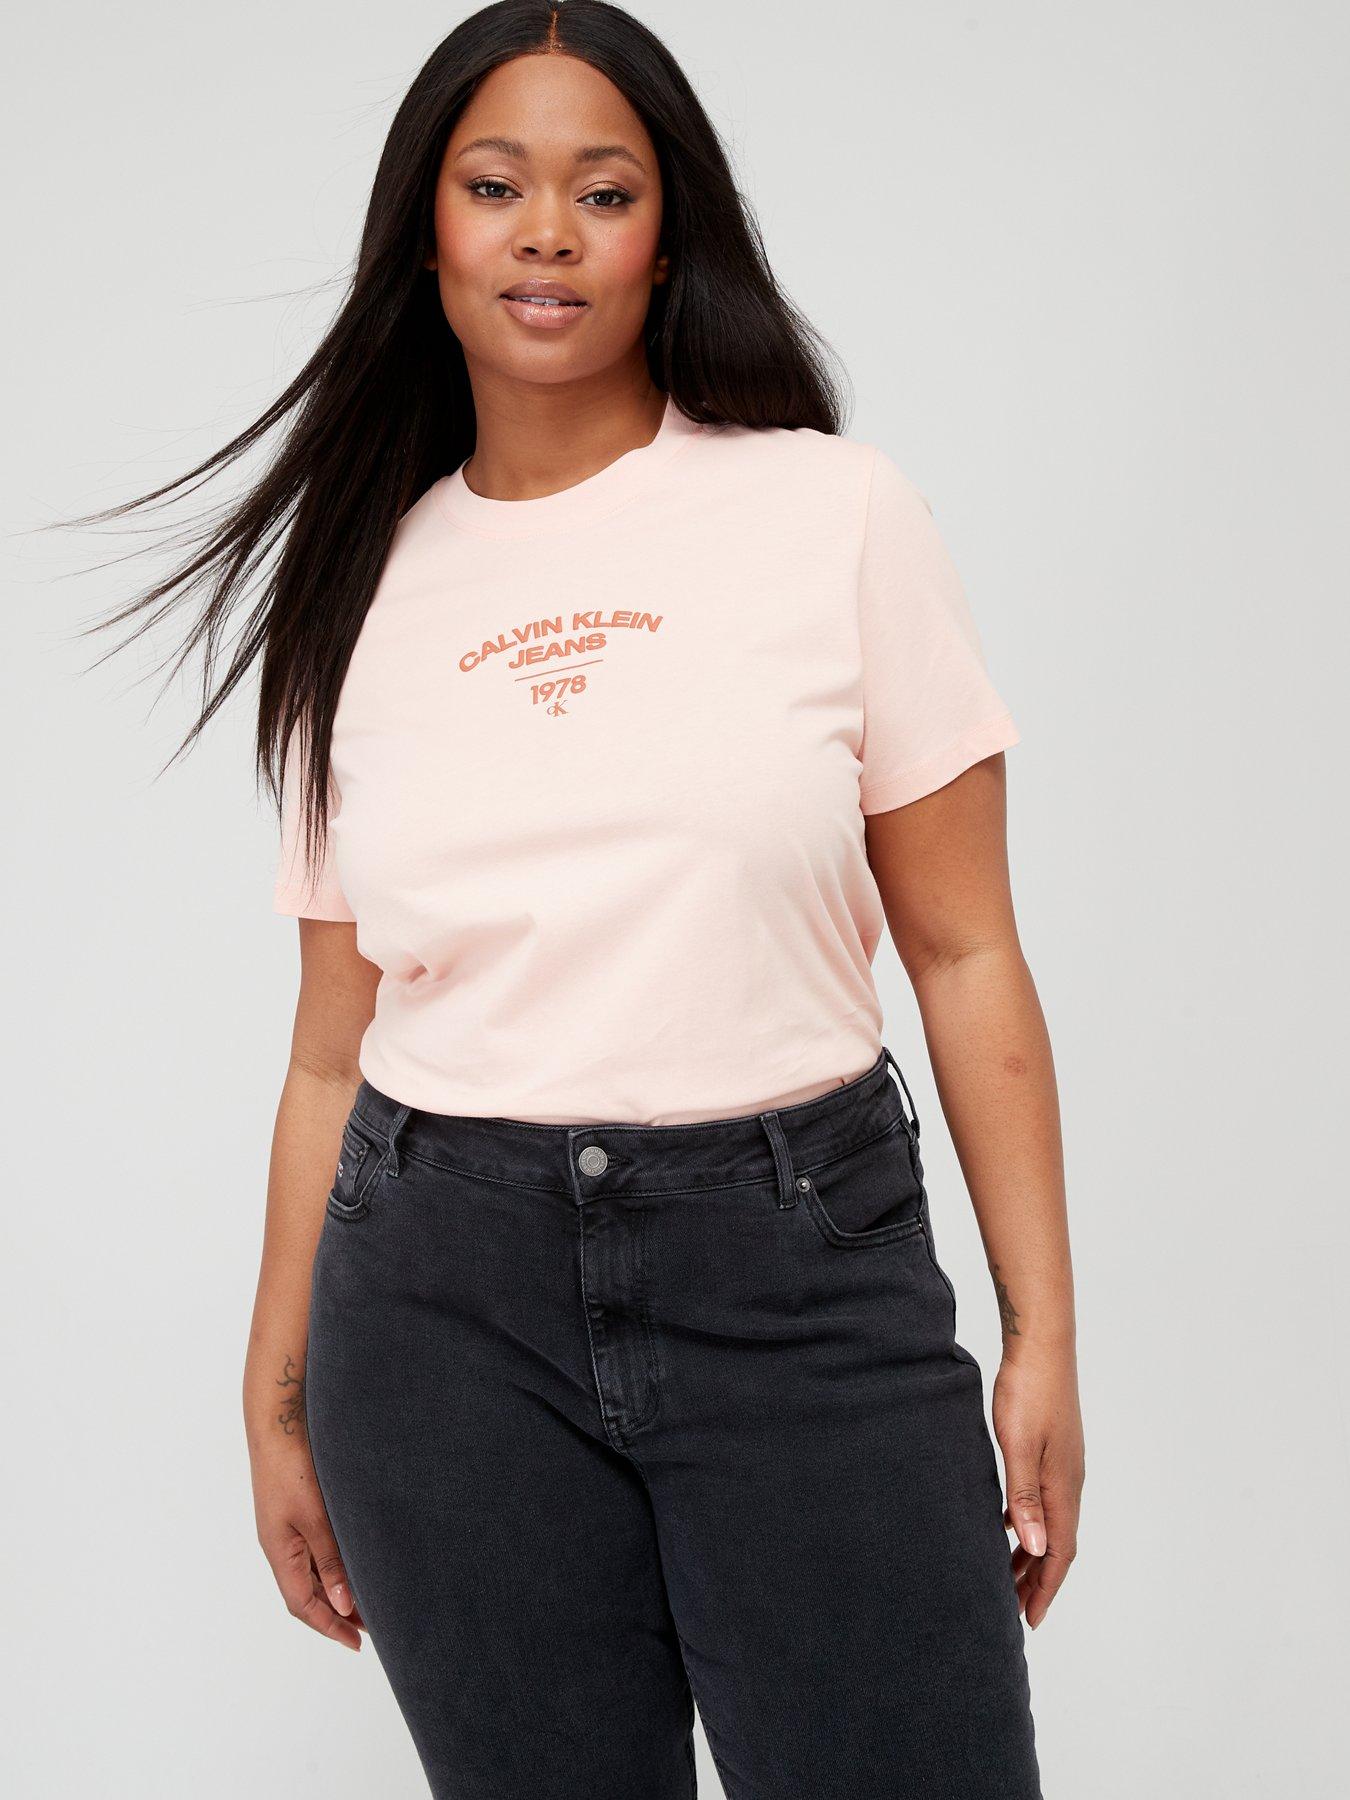 Short Sleeve | Calvin klein jeans | Tops & t-shirts | Women | Very Ireland